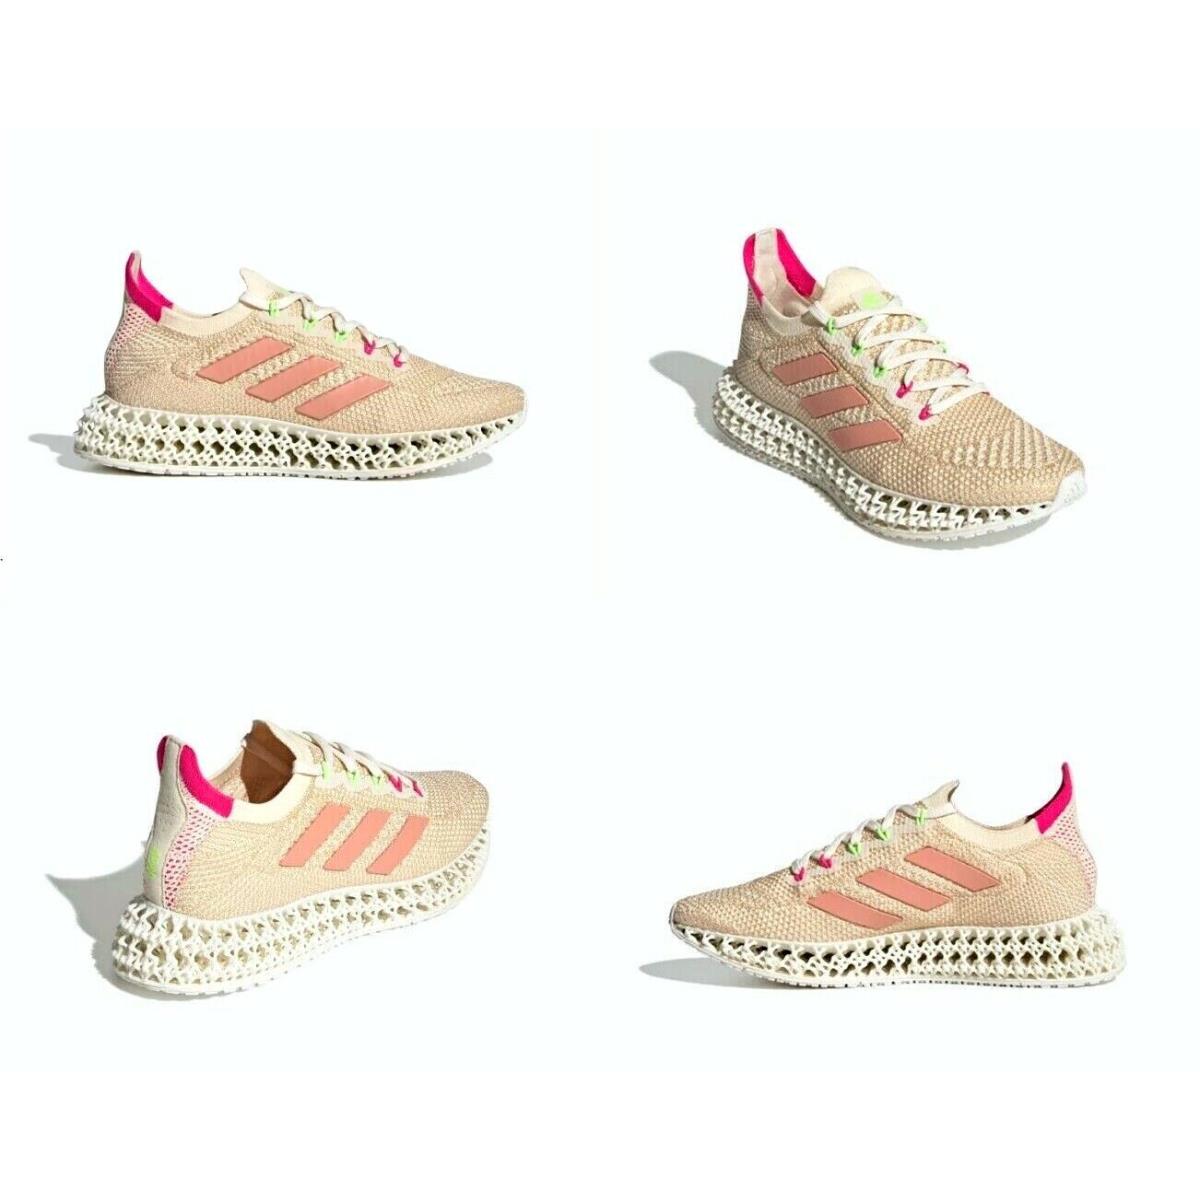 Adidas 4D Fwd Pink / Green Running Shoes Womens Size 10 Q46444